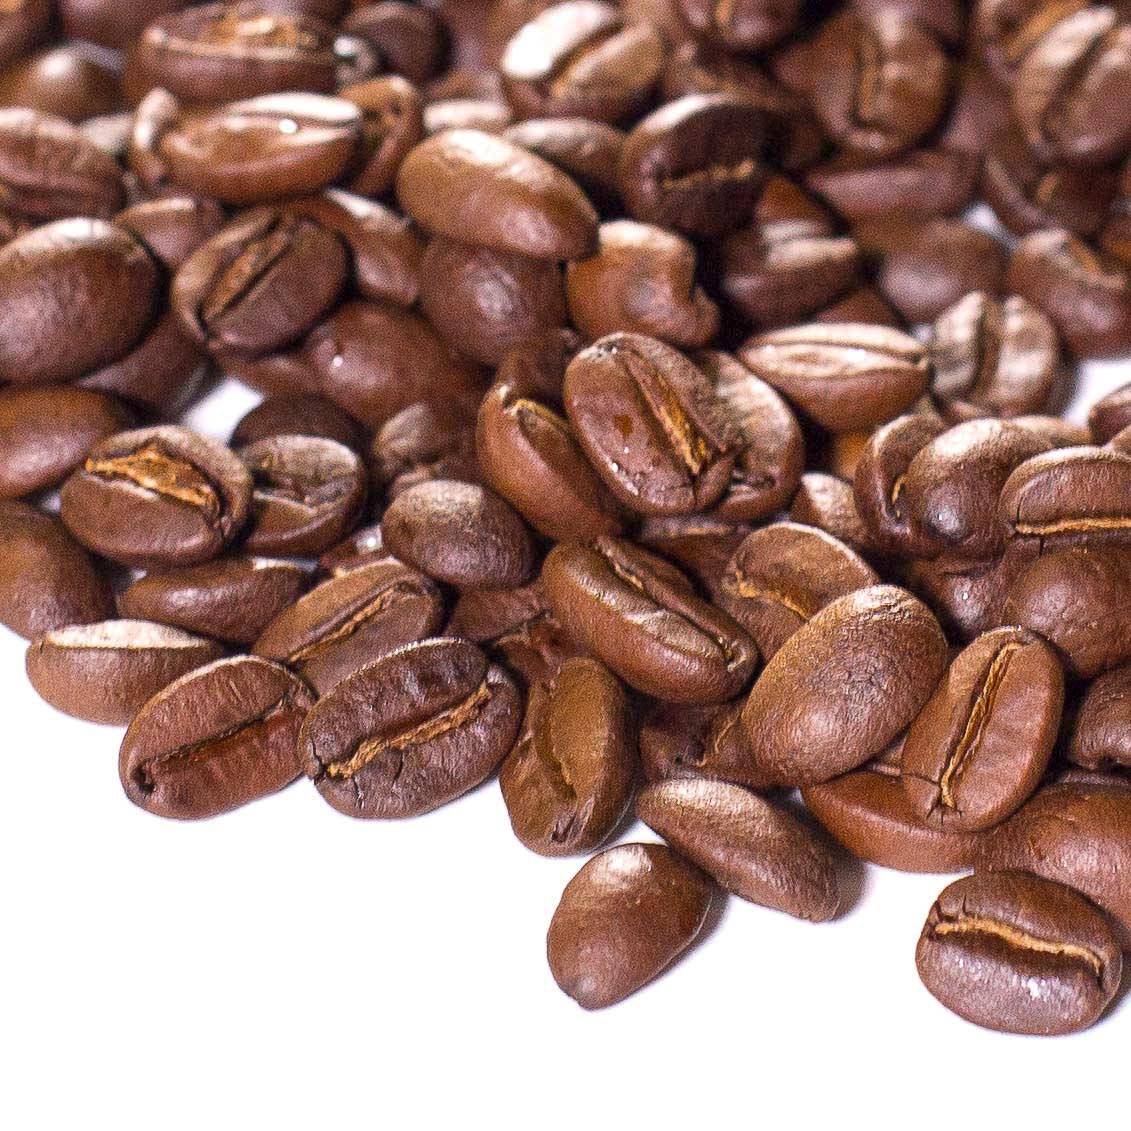 Сорт кофе марагоджип: вкус и аромат, 5 разновидностей по плантациям в никарагуа, колумбии, мексике, гватемале